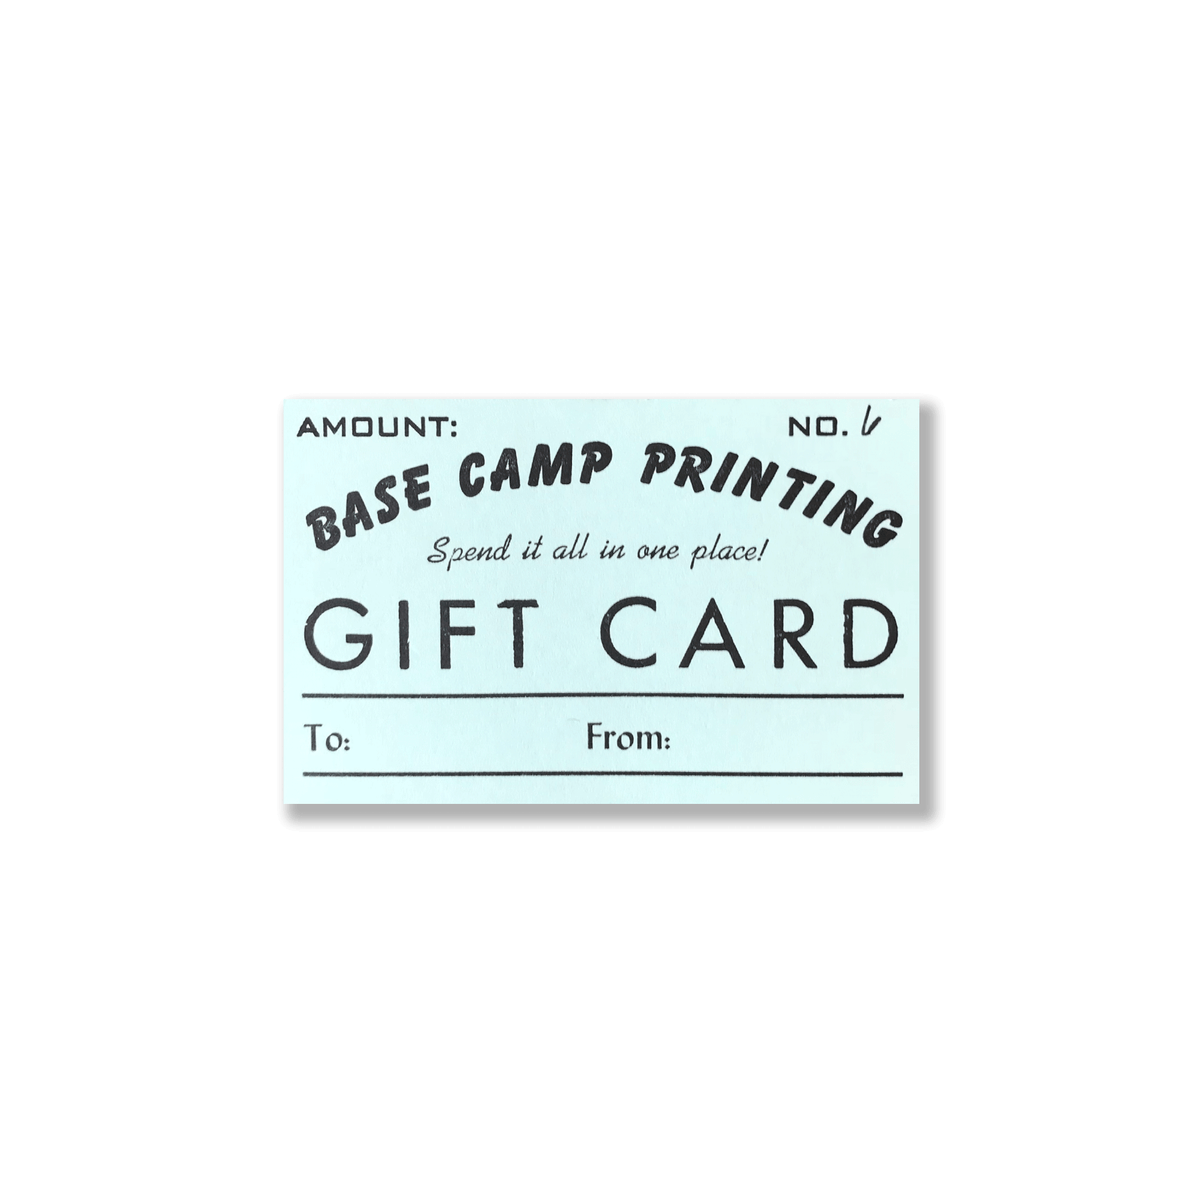 Base Camp Printing Co. Gift Card